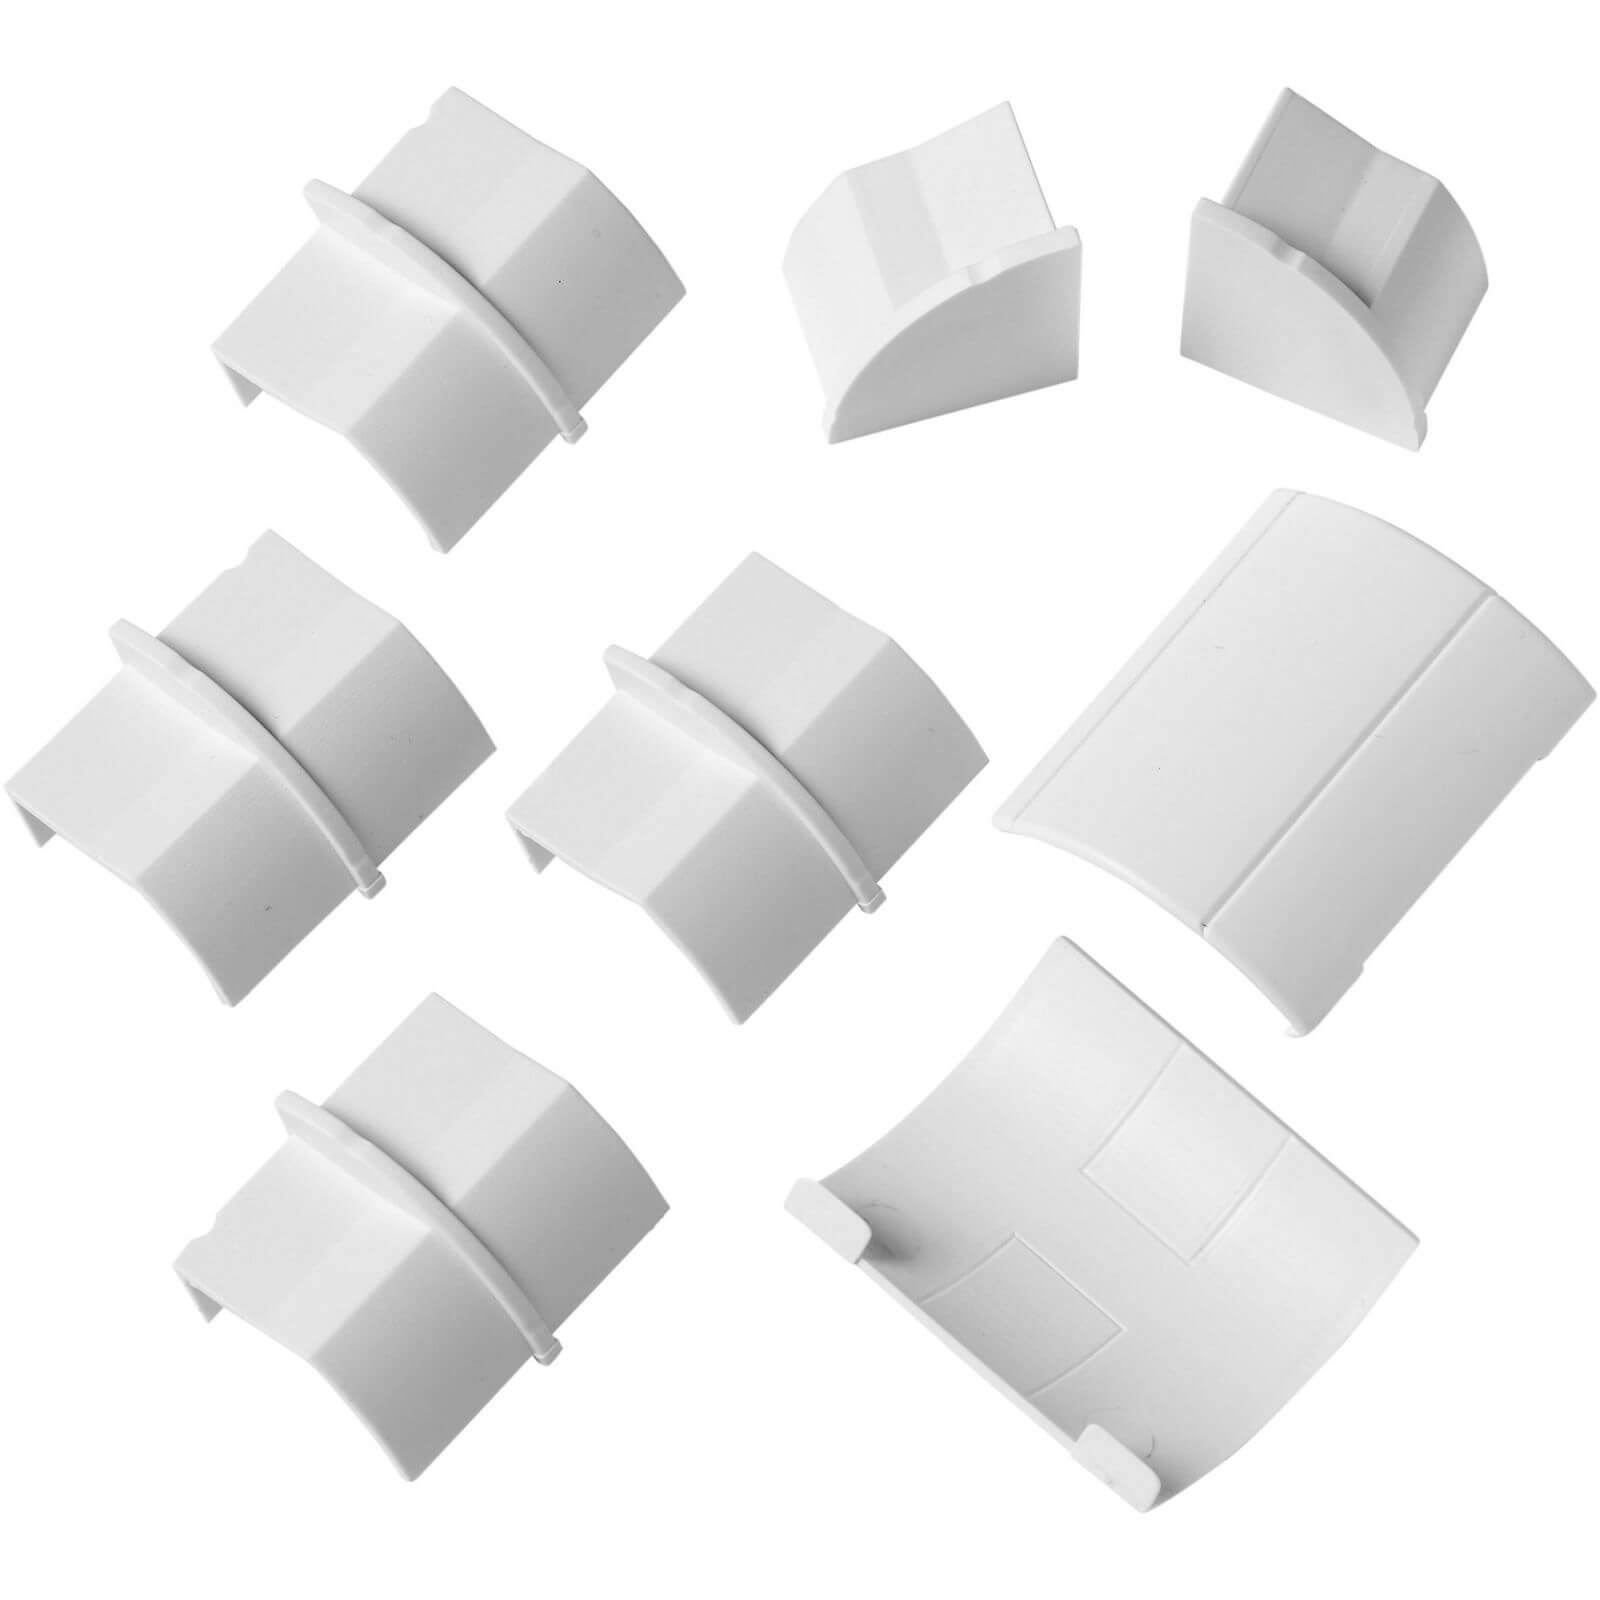 D-Line Quadrant Decorative Trunking Clip Over 8 Piece Accessory Multipack 22mm x 22mm White